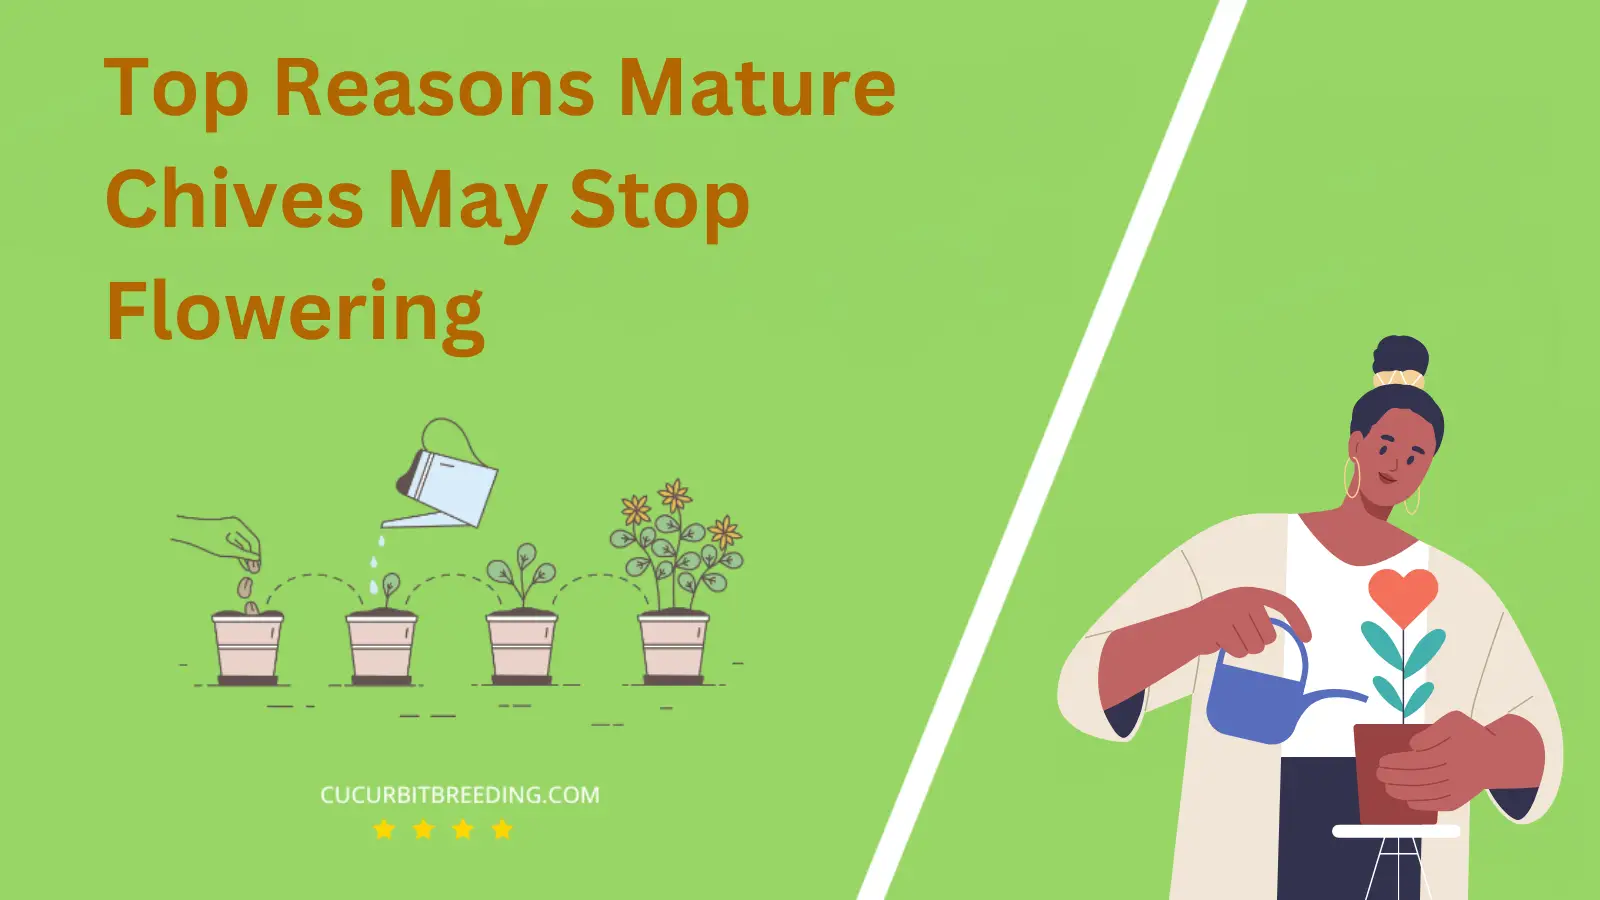 Top Reasons Mature Chives May Stop Flowering